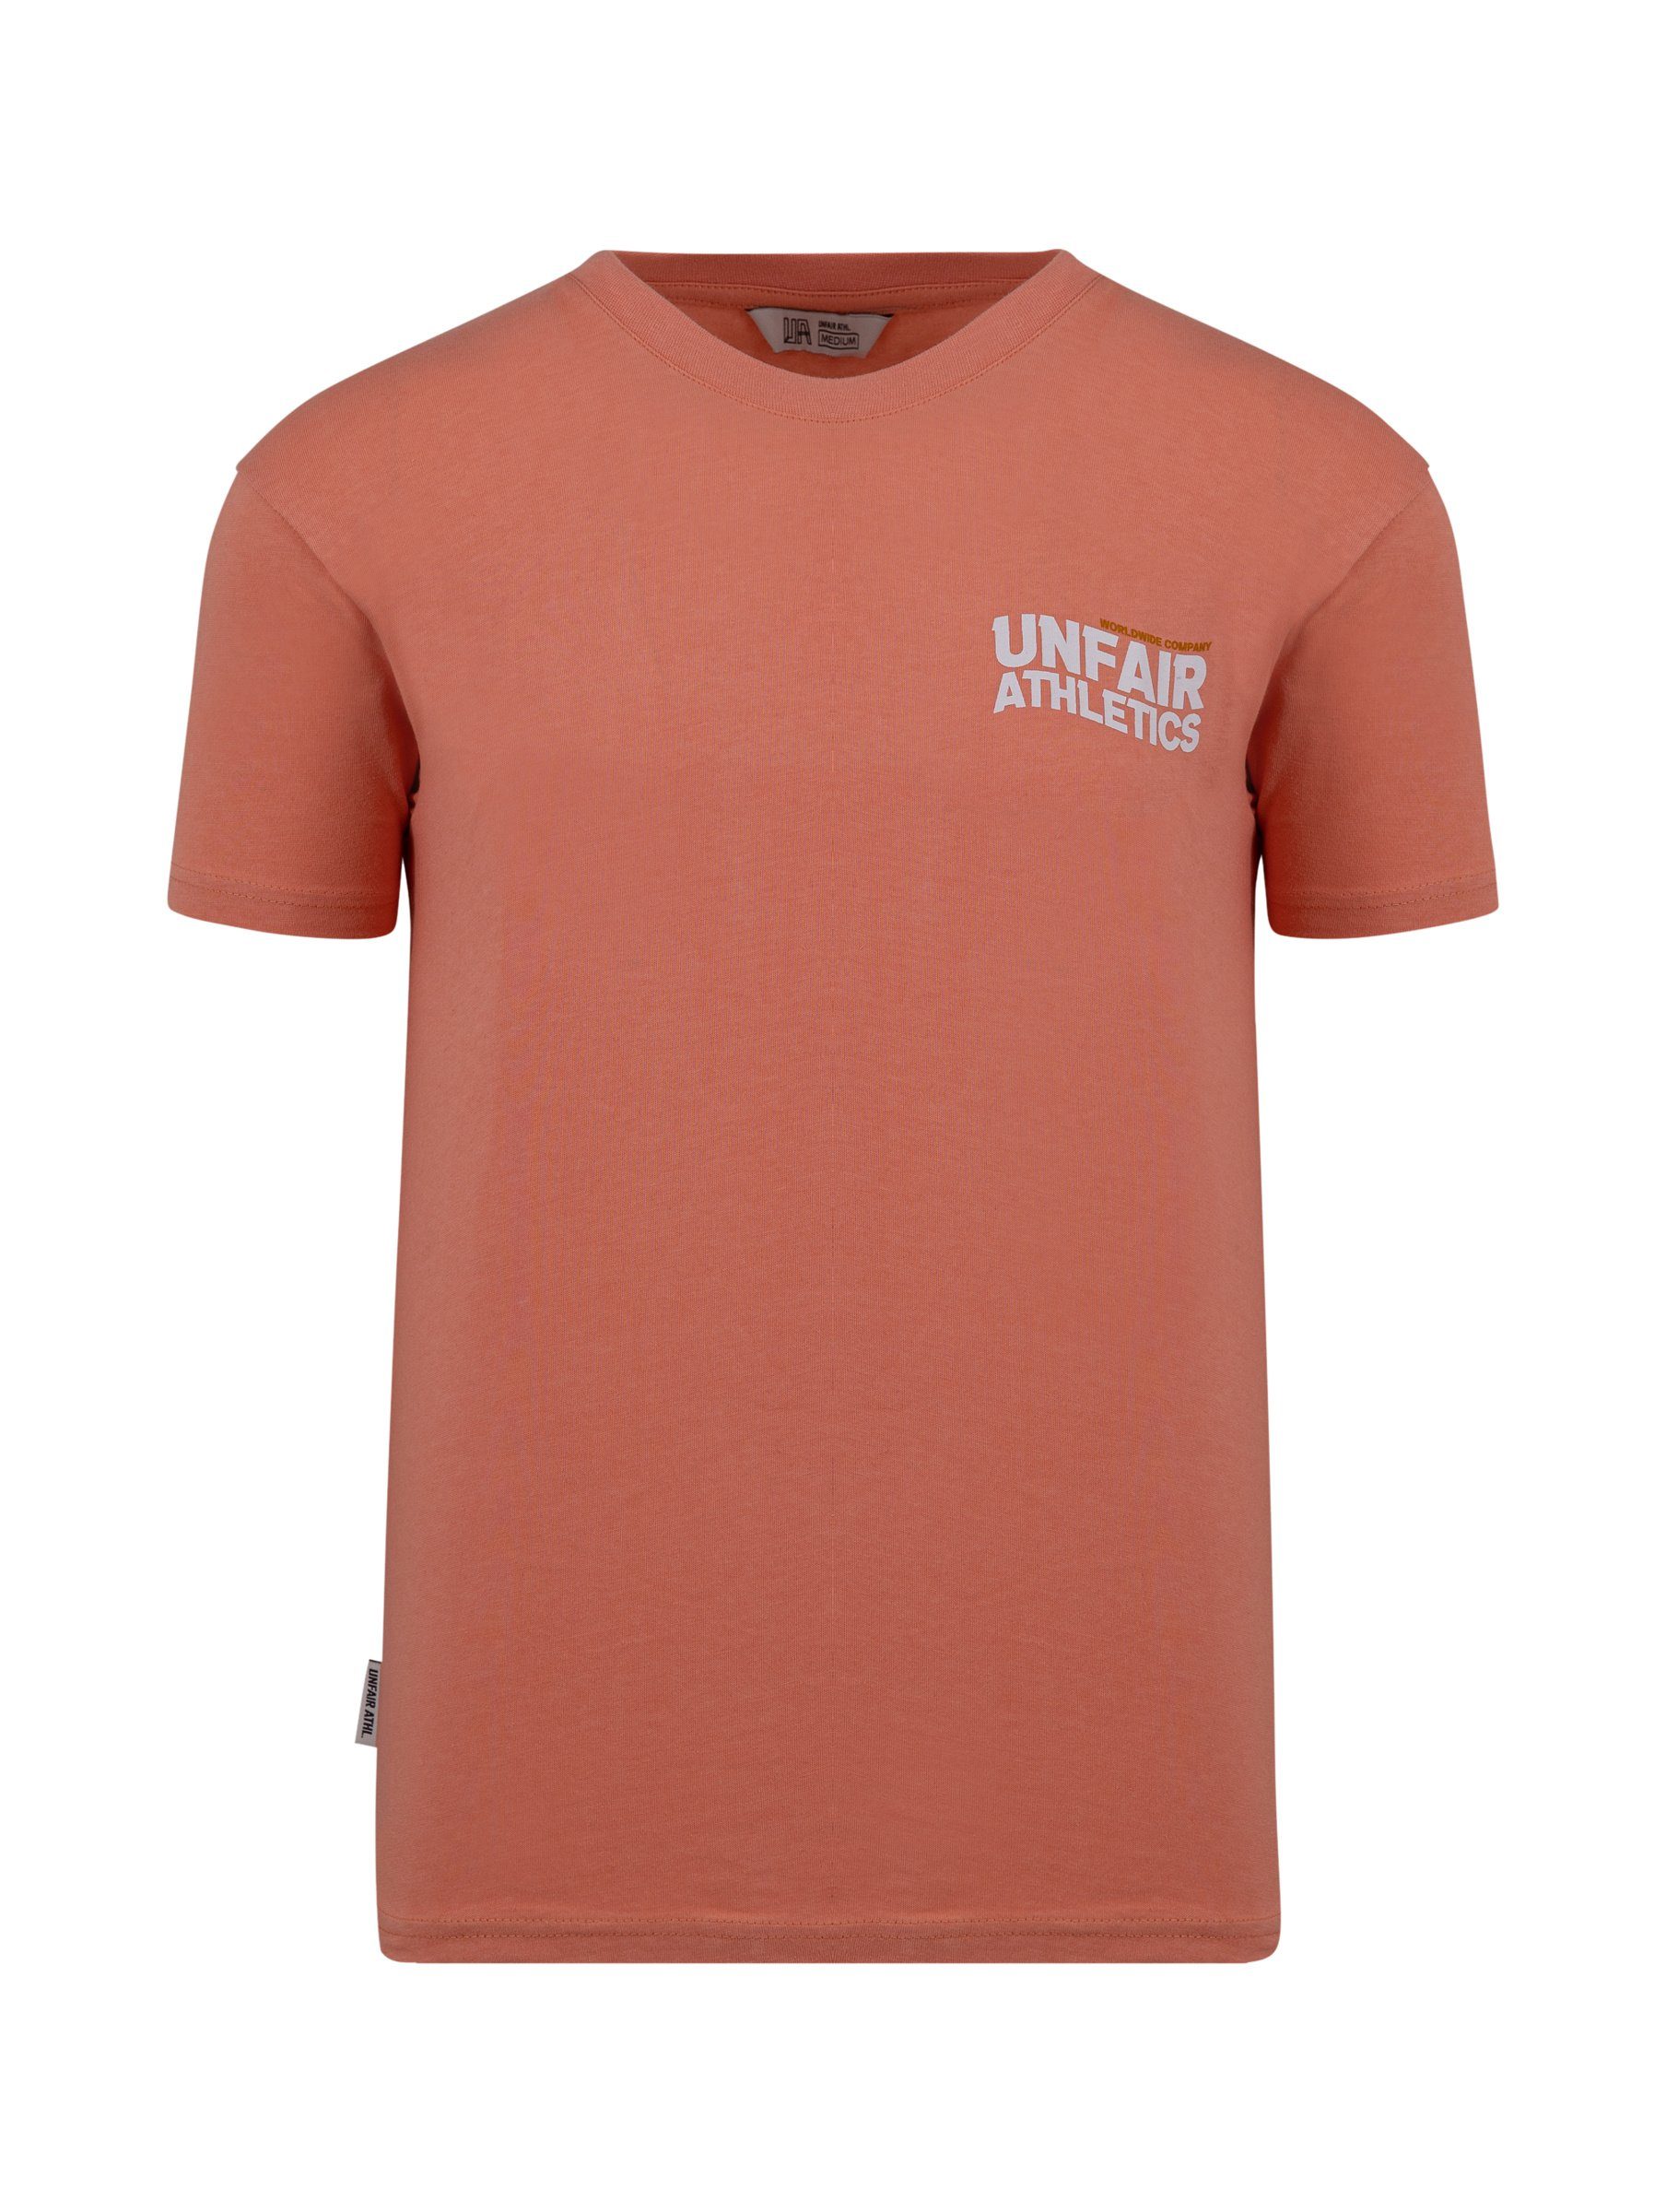 Athletics Subculture Athletics Network T-Shirt orange Adult Unfair Herren Unfair T-Shirt